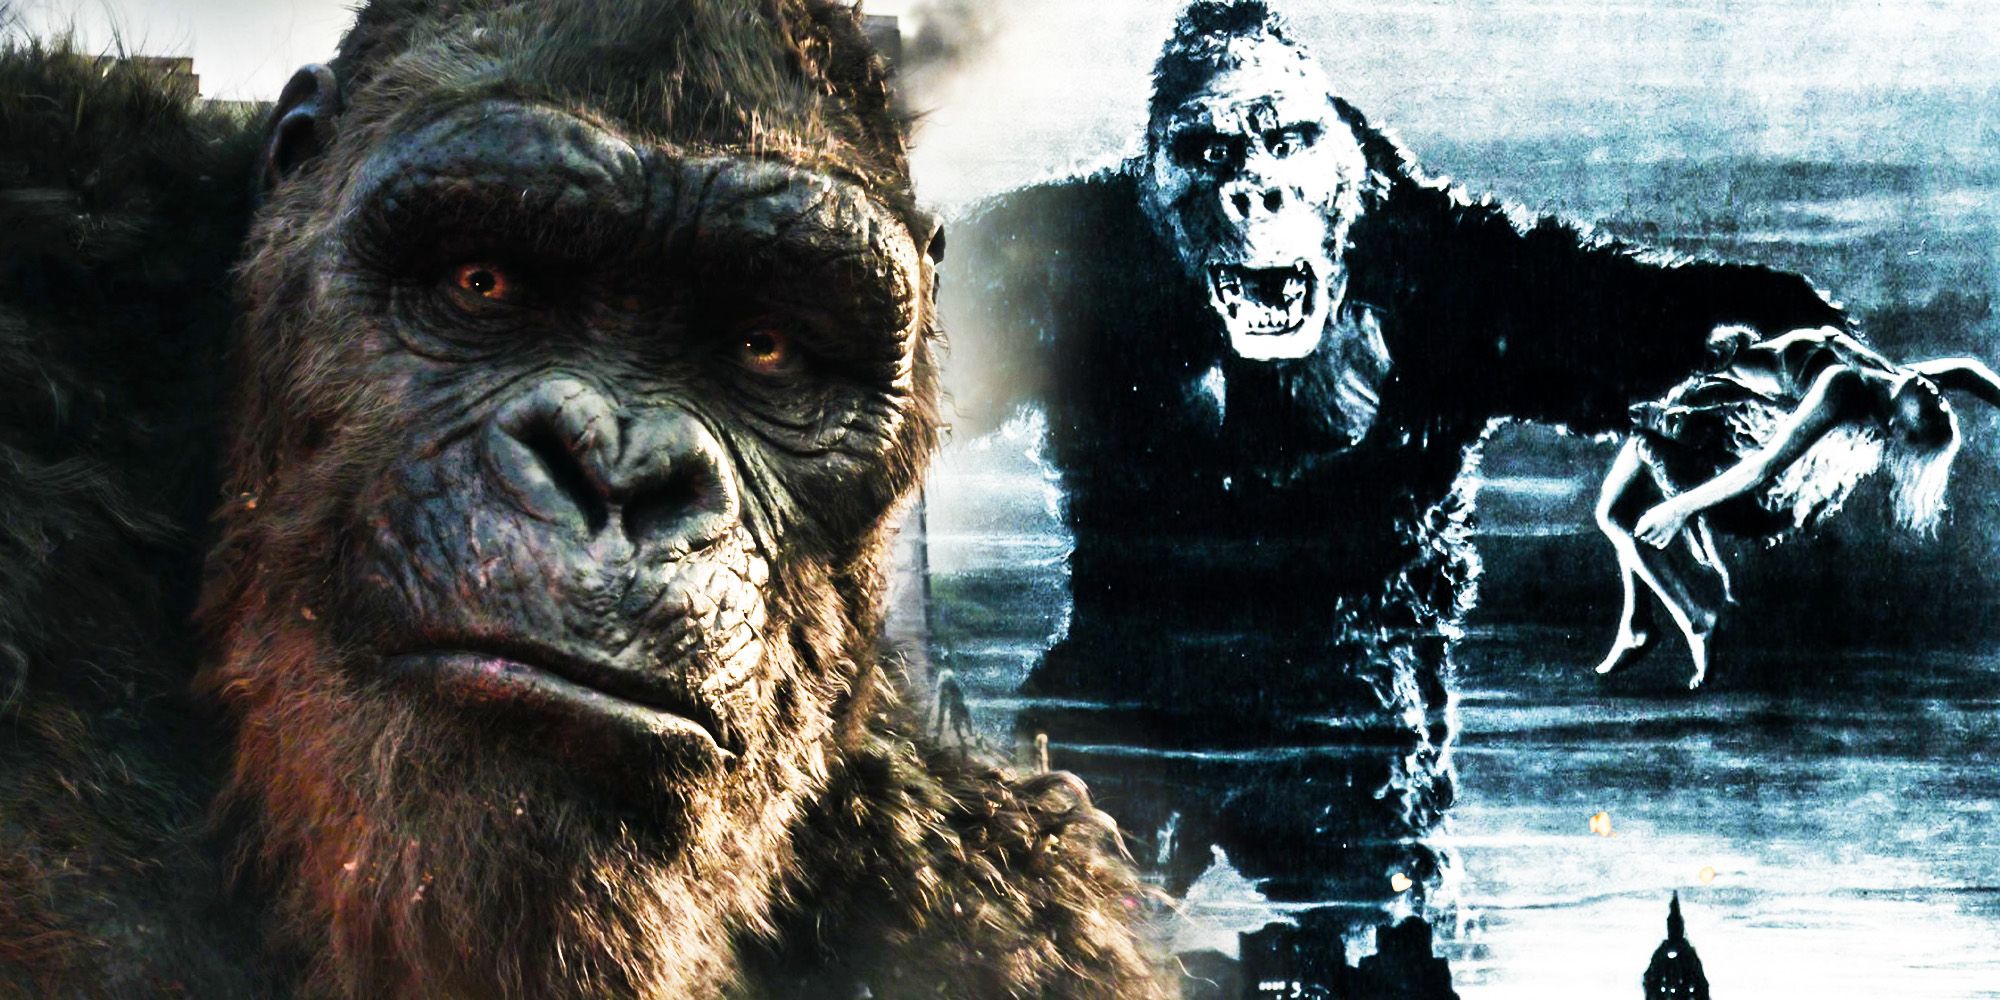 https://static1.srcdn.com/wordpress/wp-content/uploads/2022/08/Godzilla-vs-kong-King-Kong.jpg